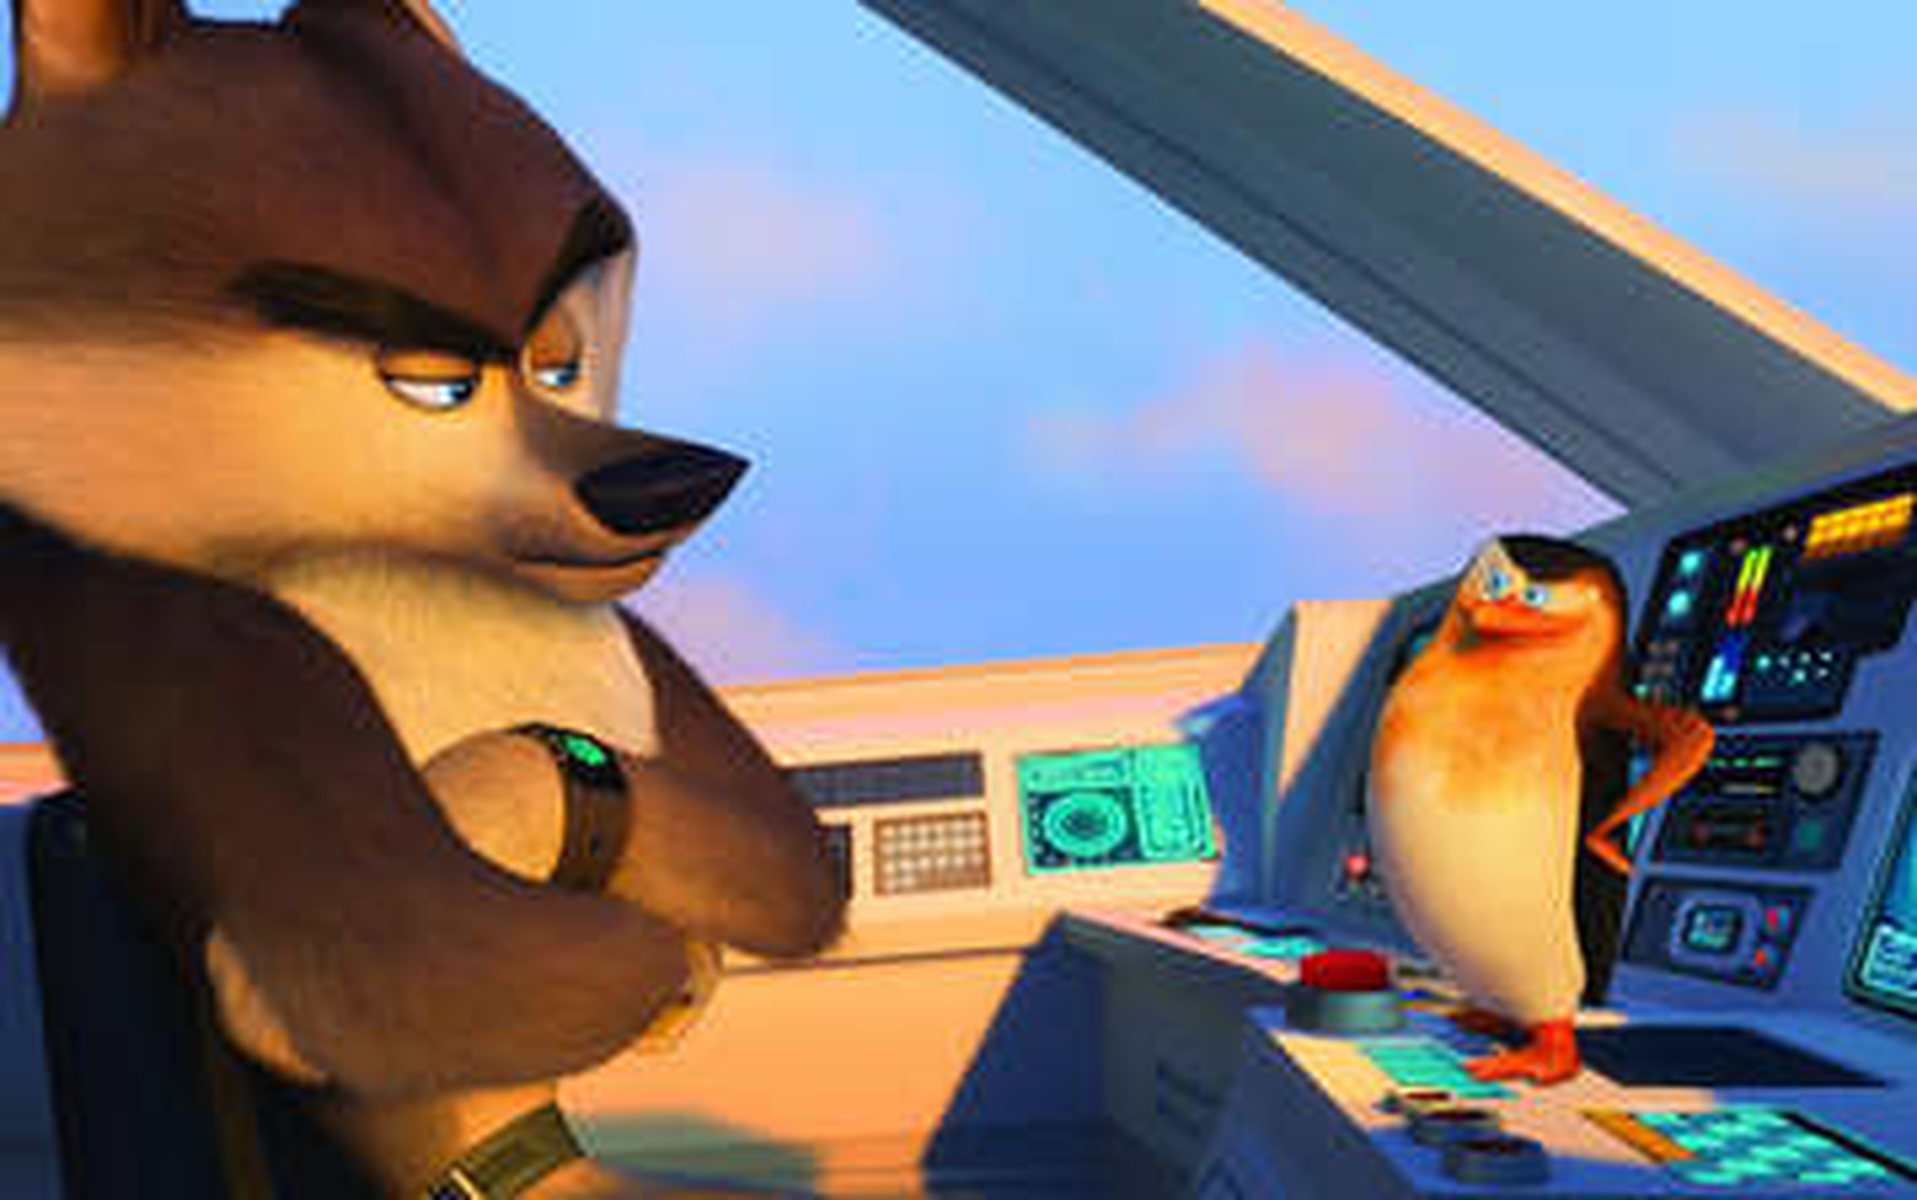 

HD заставки мультфильмы 1600x1200 Пингвины Мадагаскара

